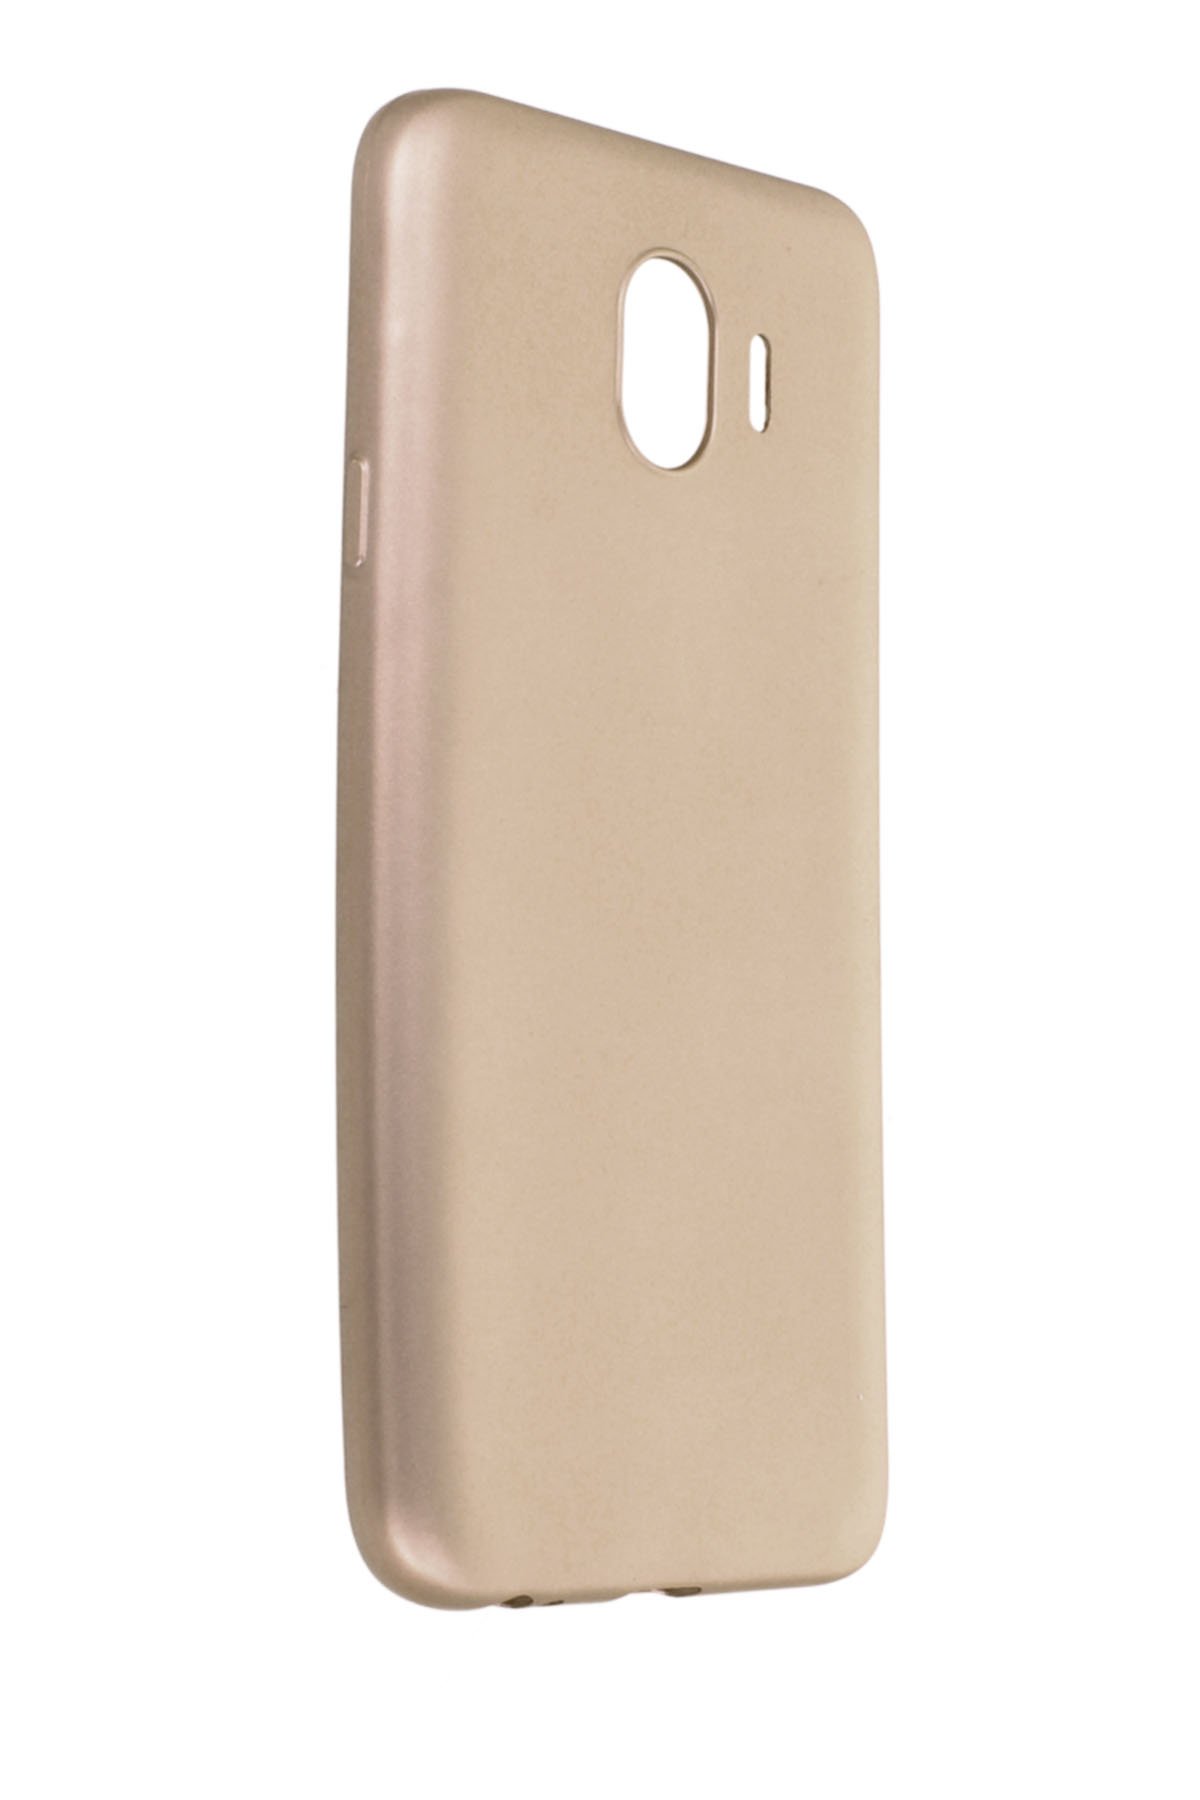 NewFace Newface Samsung Galaxy J4 Kılıf Premium Rubber Silikon - Gold